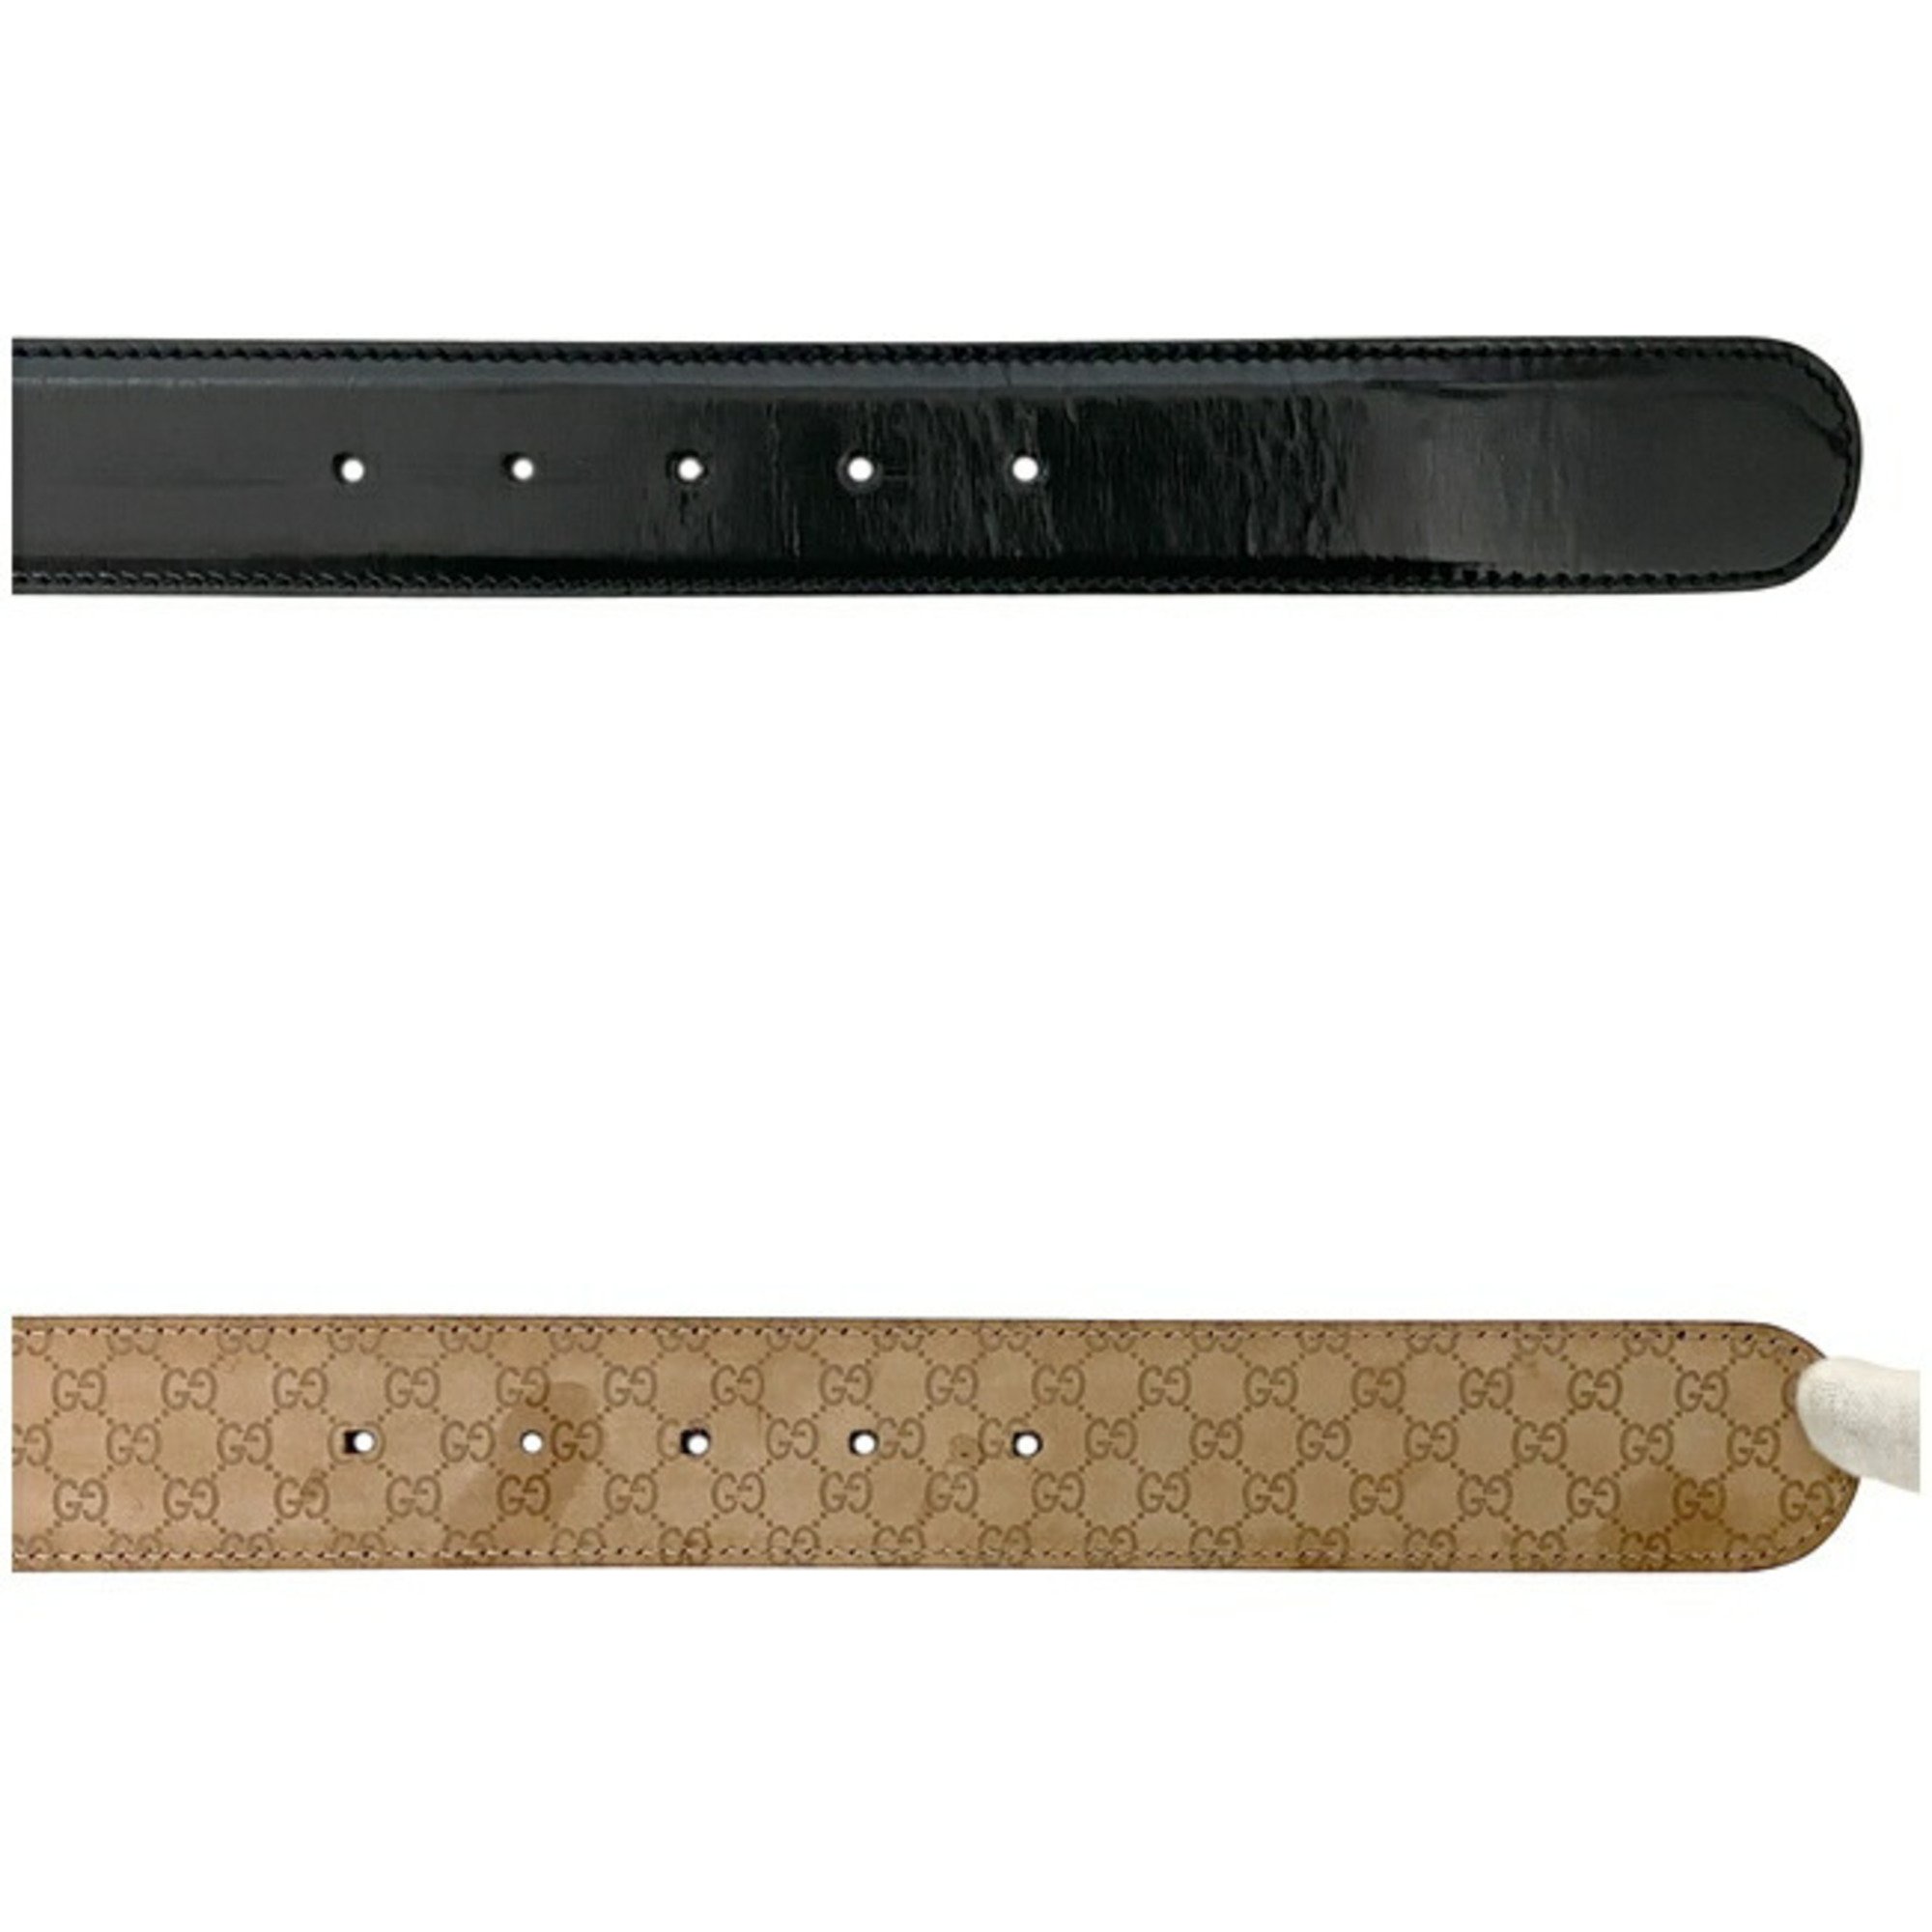 Gucci Belt Black Beige Gold Bamboo 189800 Patent Leather GUCCI 40mm 83cm Waist GG Women's Men's